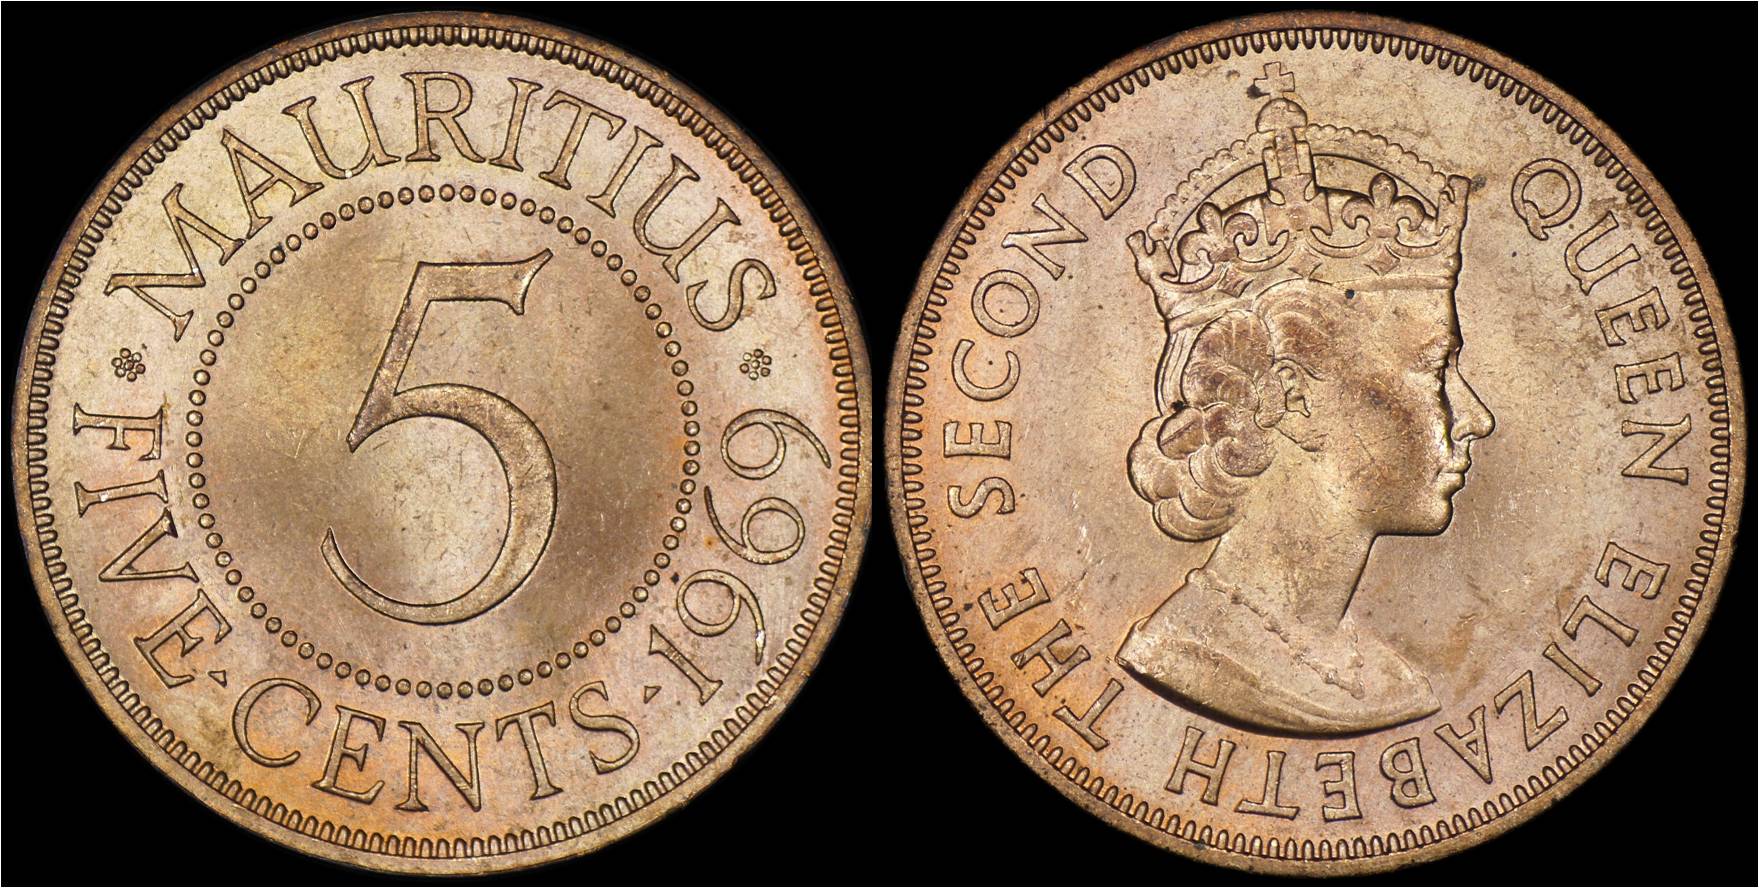 KM 34 Mauritius 1969 5 cents.jpg